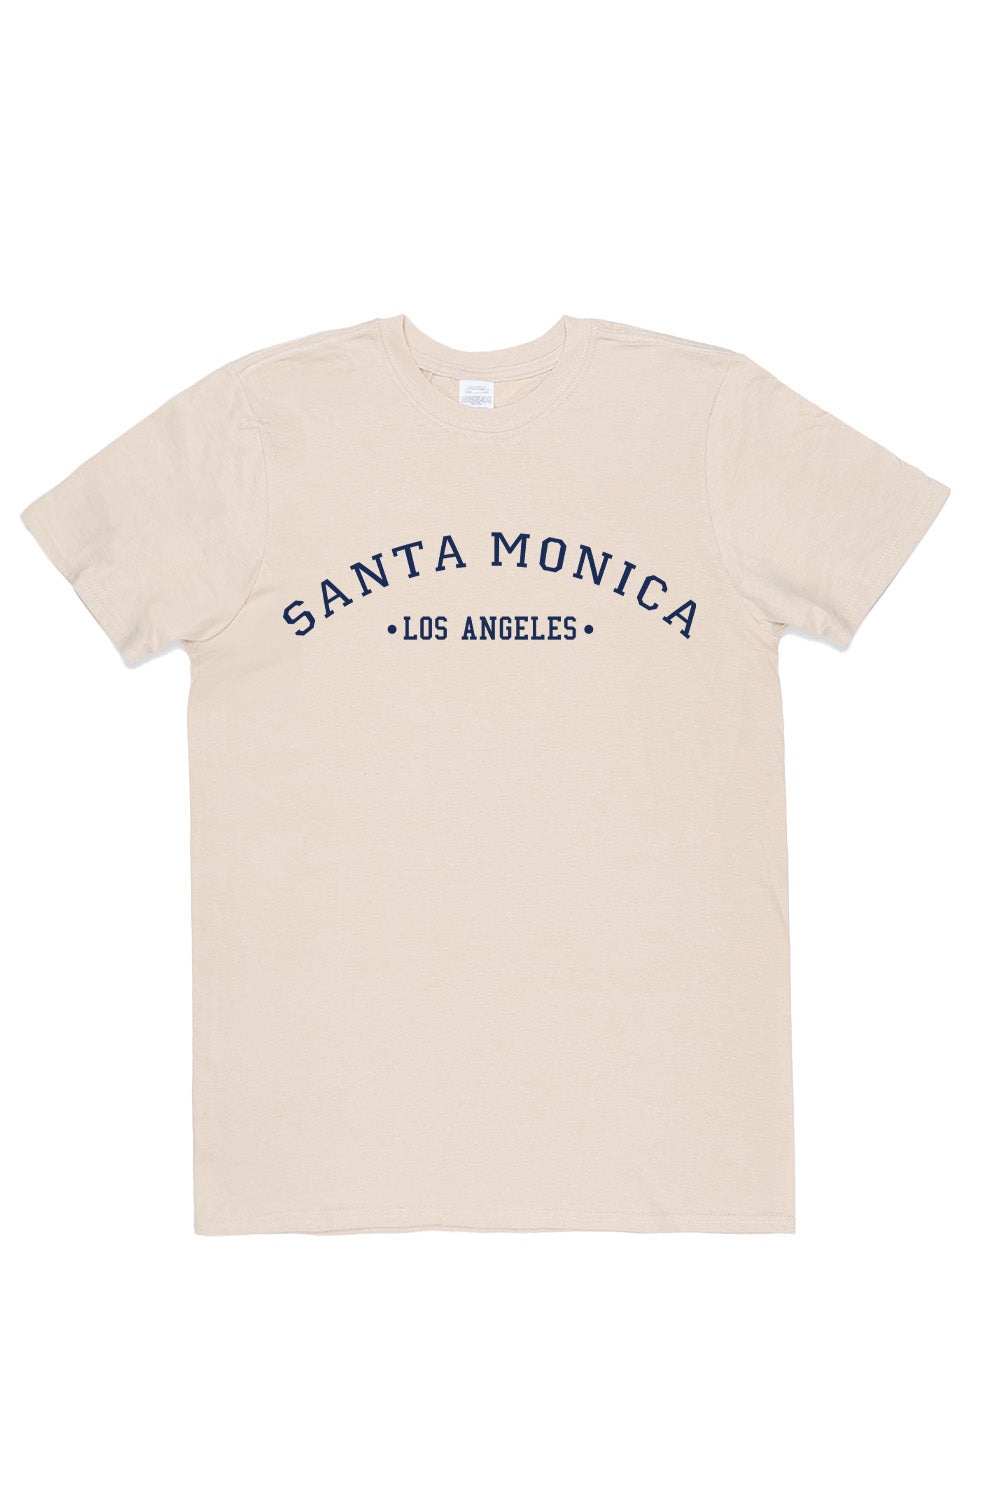 Santa Monica T-Shirt in Sand (Custom Packs)